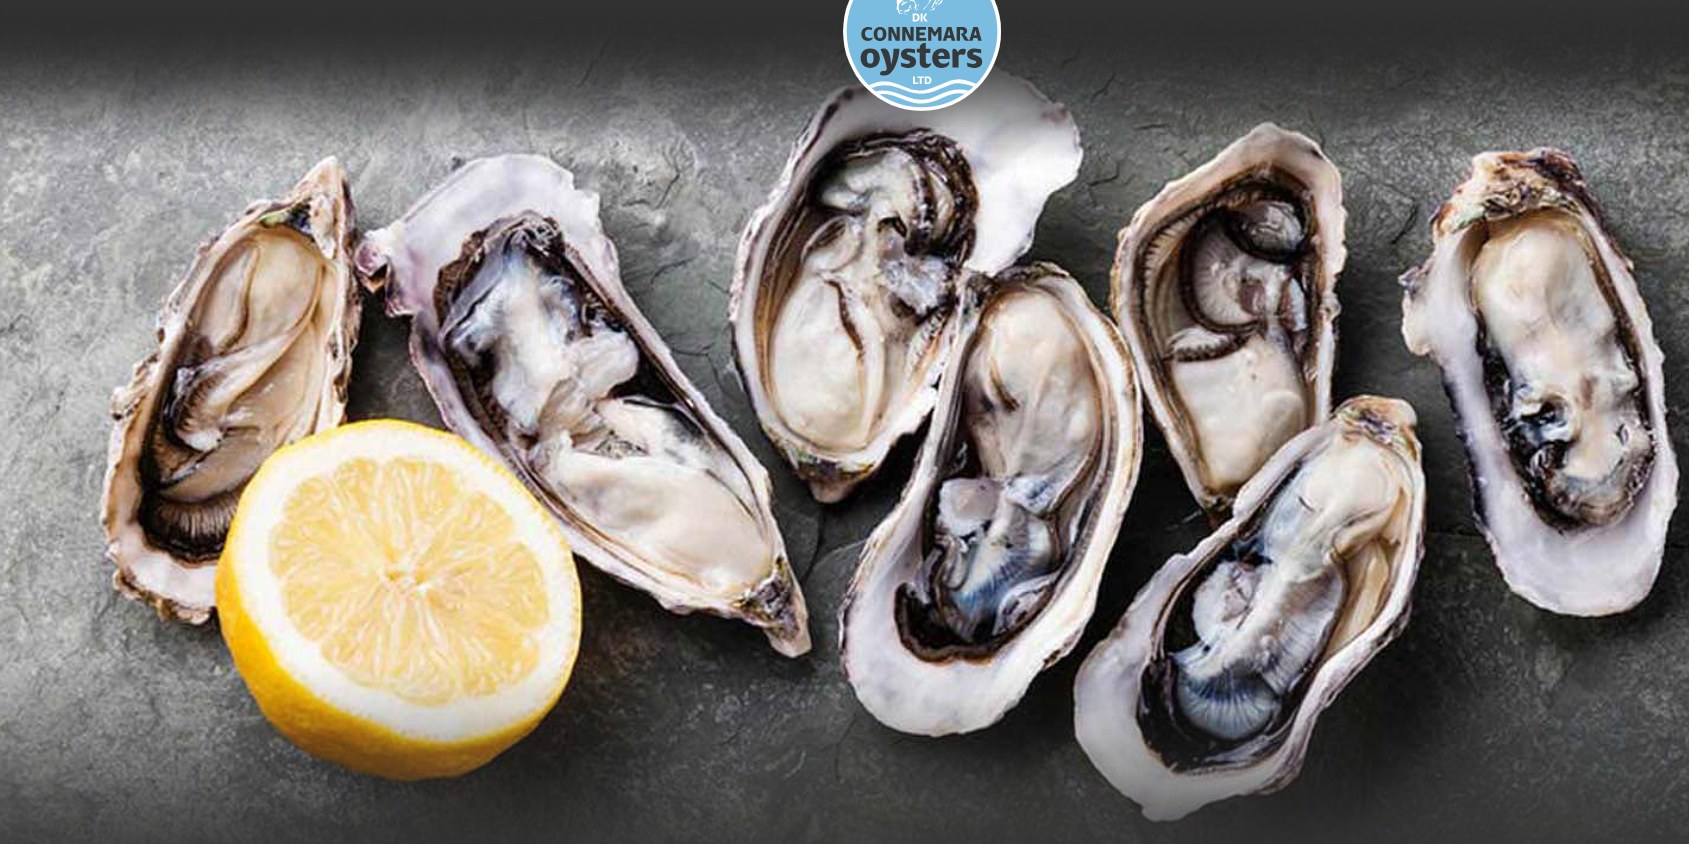 connemara oysters